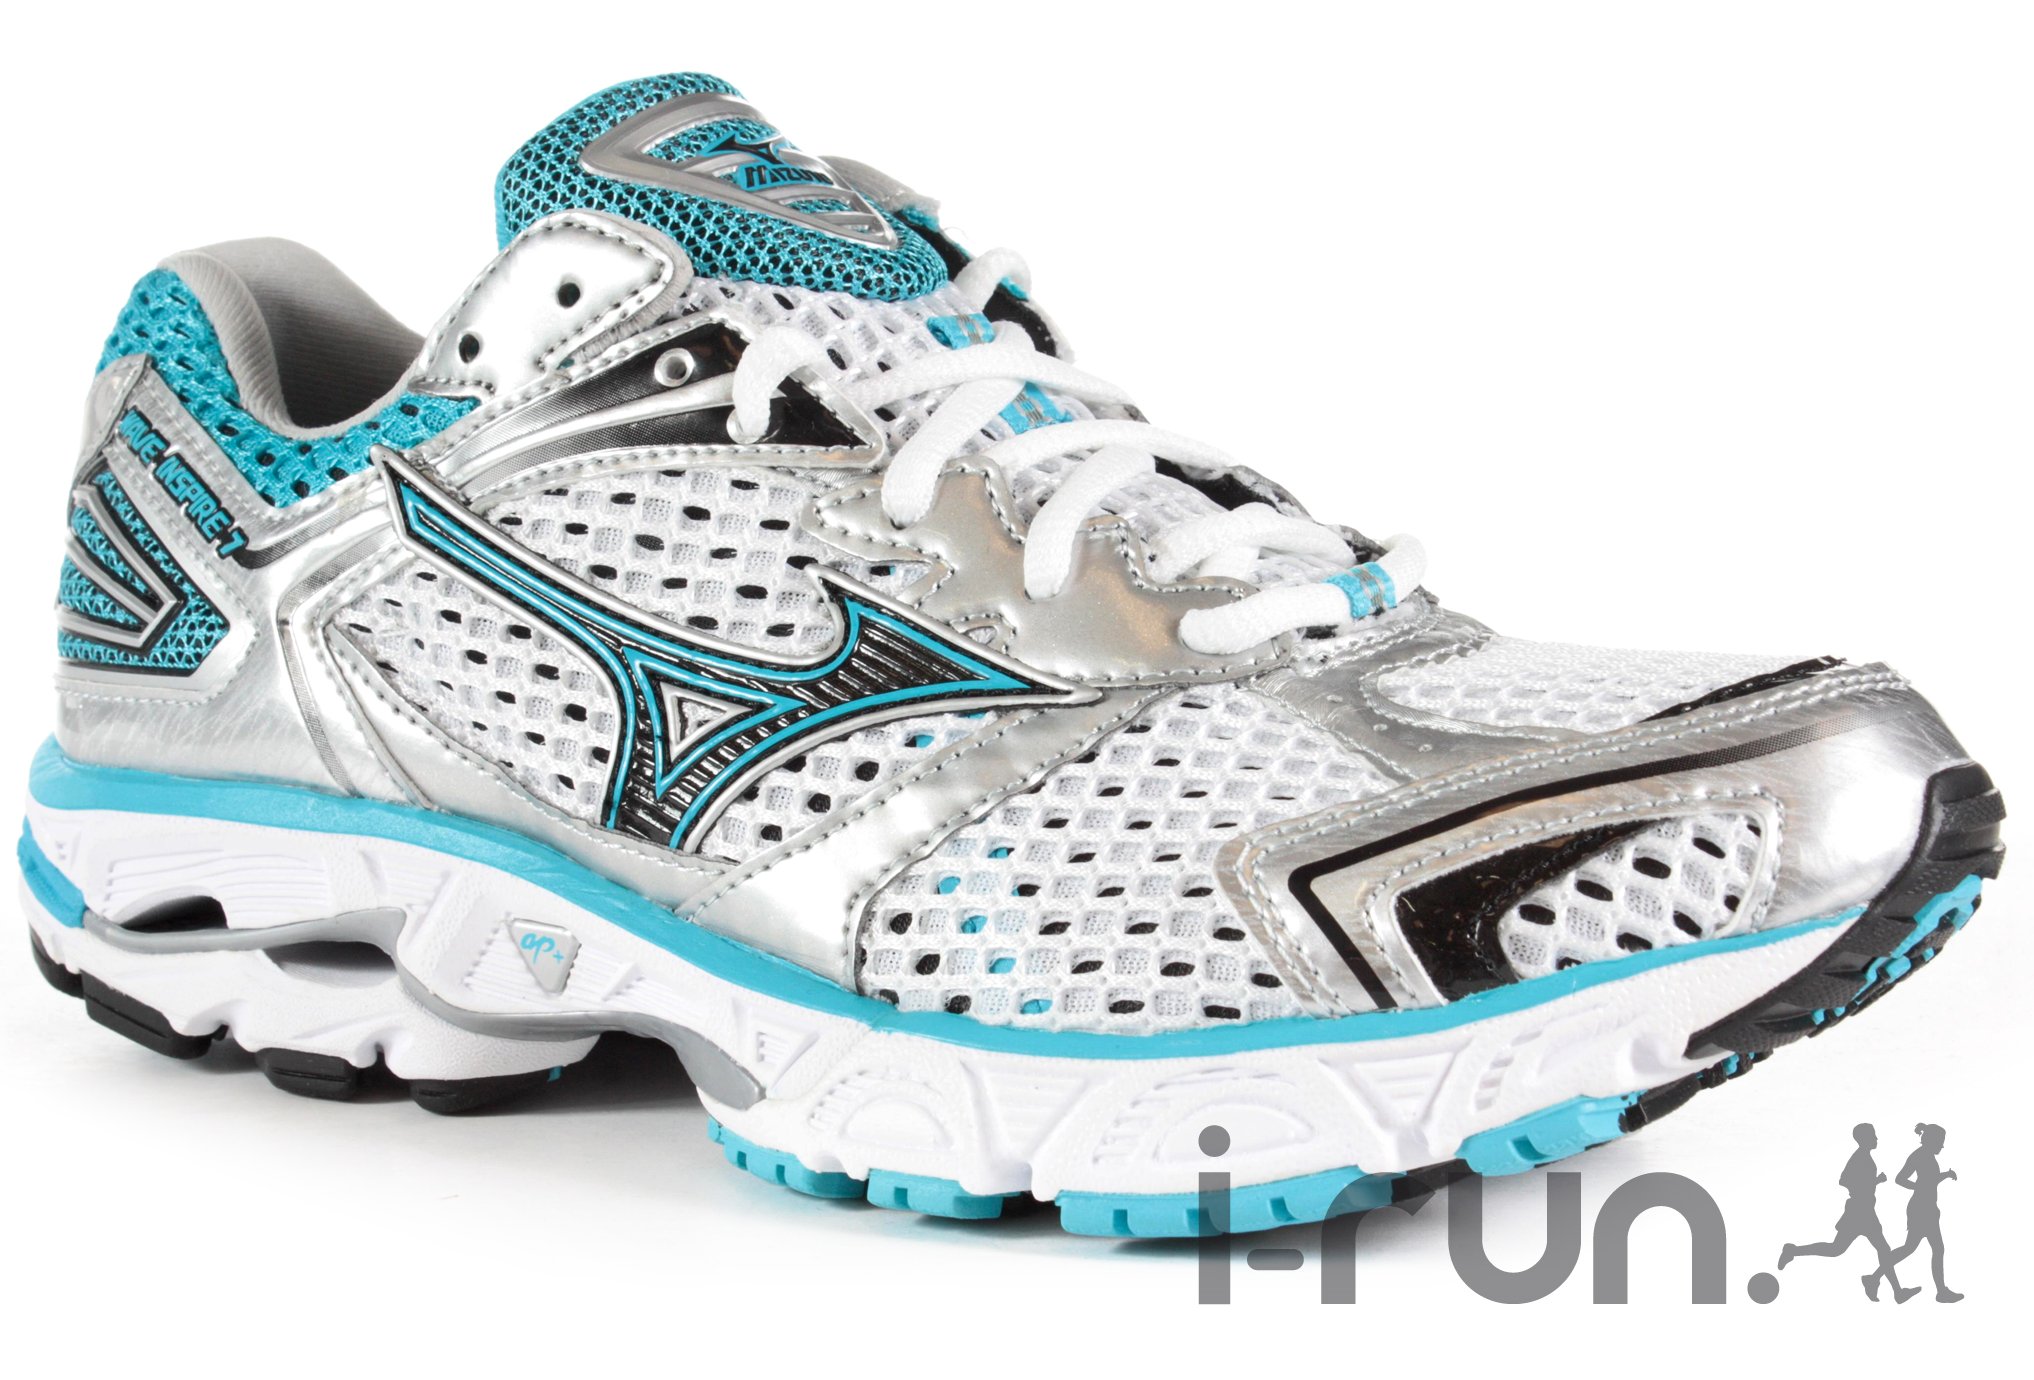 Mizuno Wave Inspire 12 femme : infos, avis et meilleur prix. Chaussures  running trail femme.